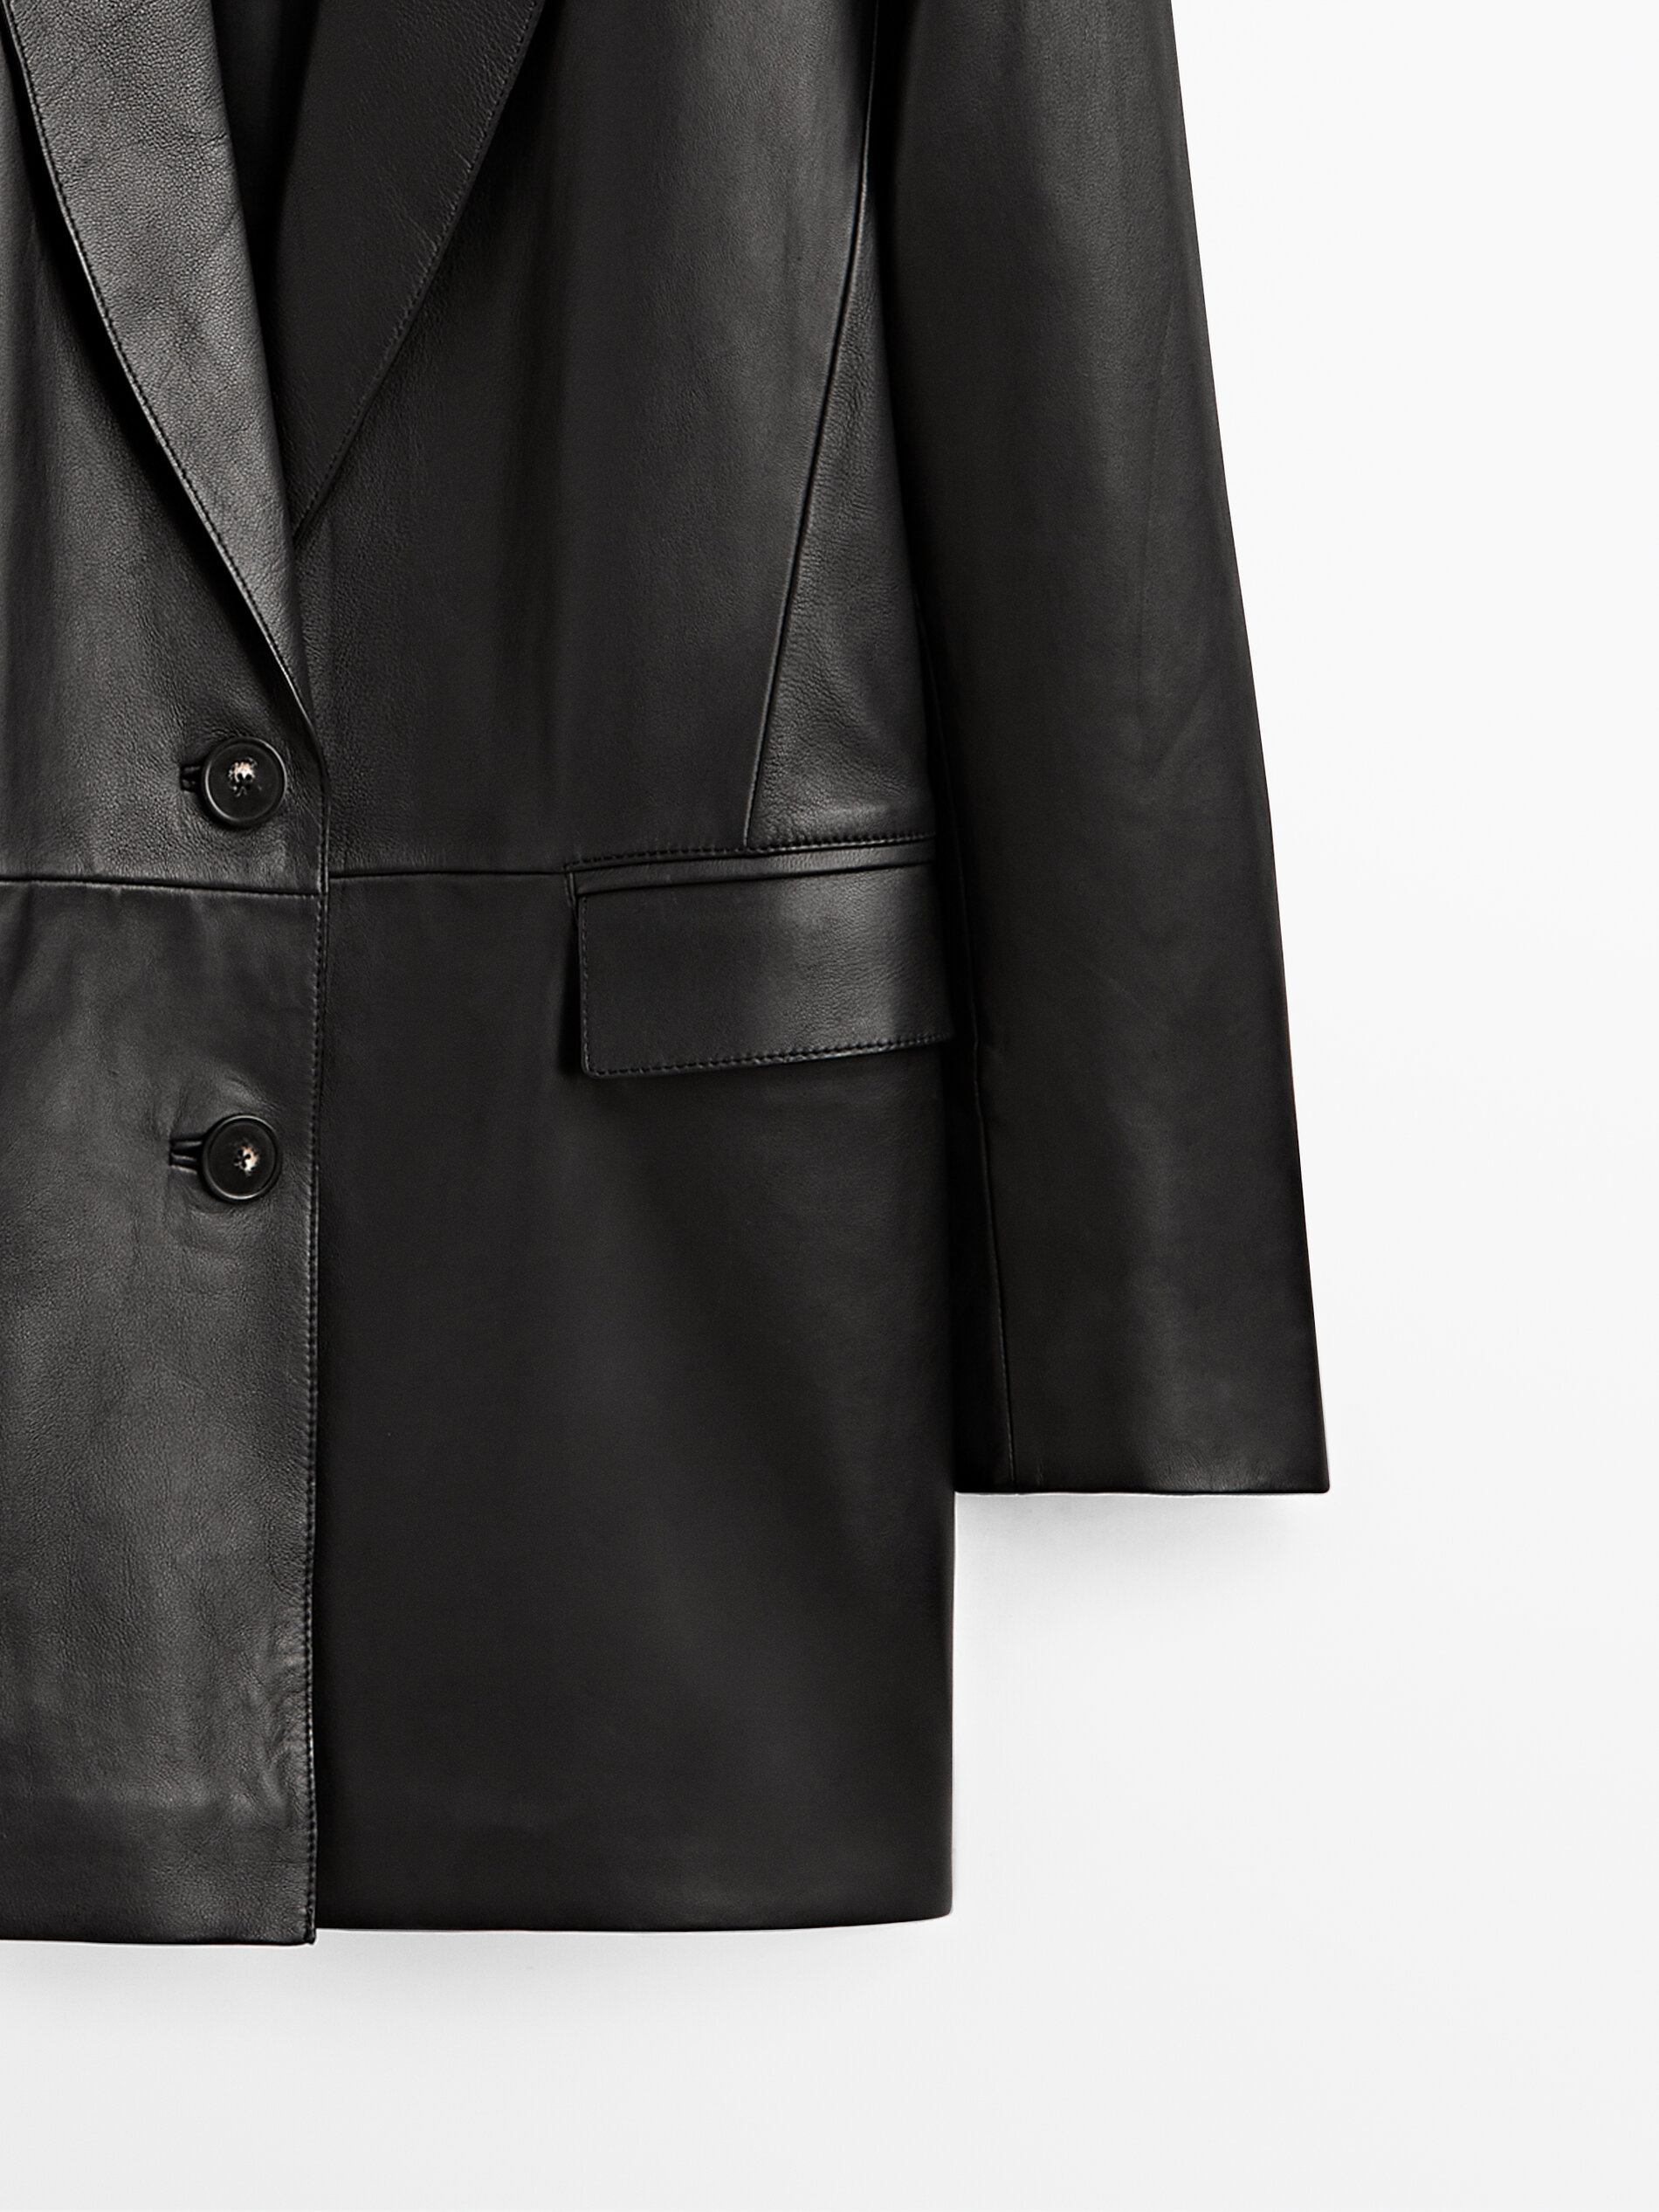 Massimo Dutti - Black nappa leather blazer